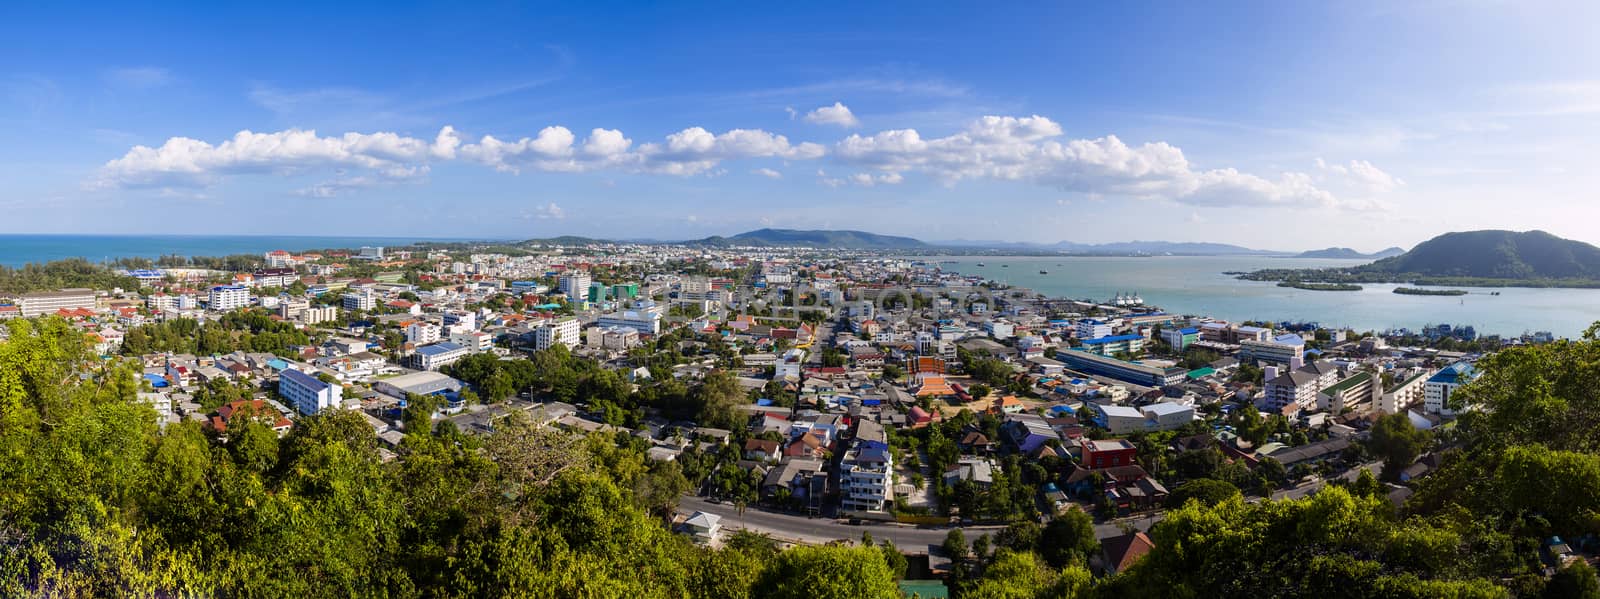 Songkhla city from top view Panorama at Tang Kuan Hilltop at  Thailand